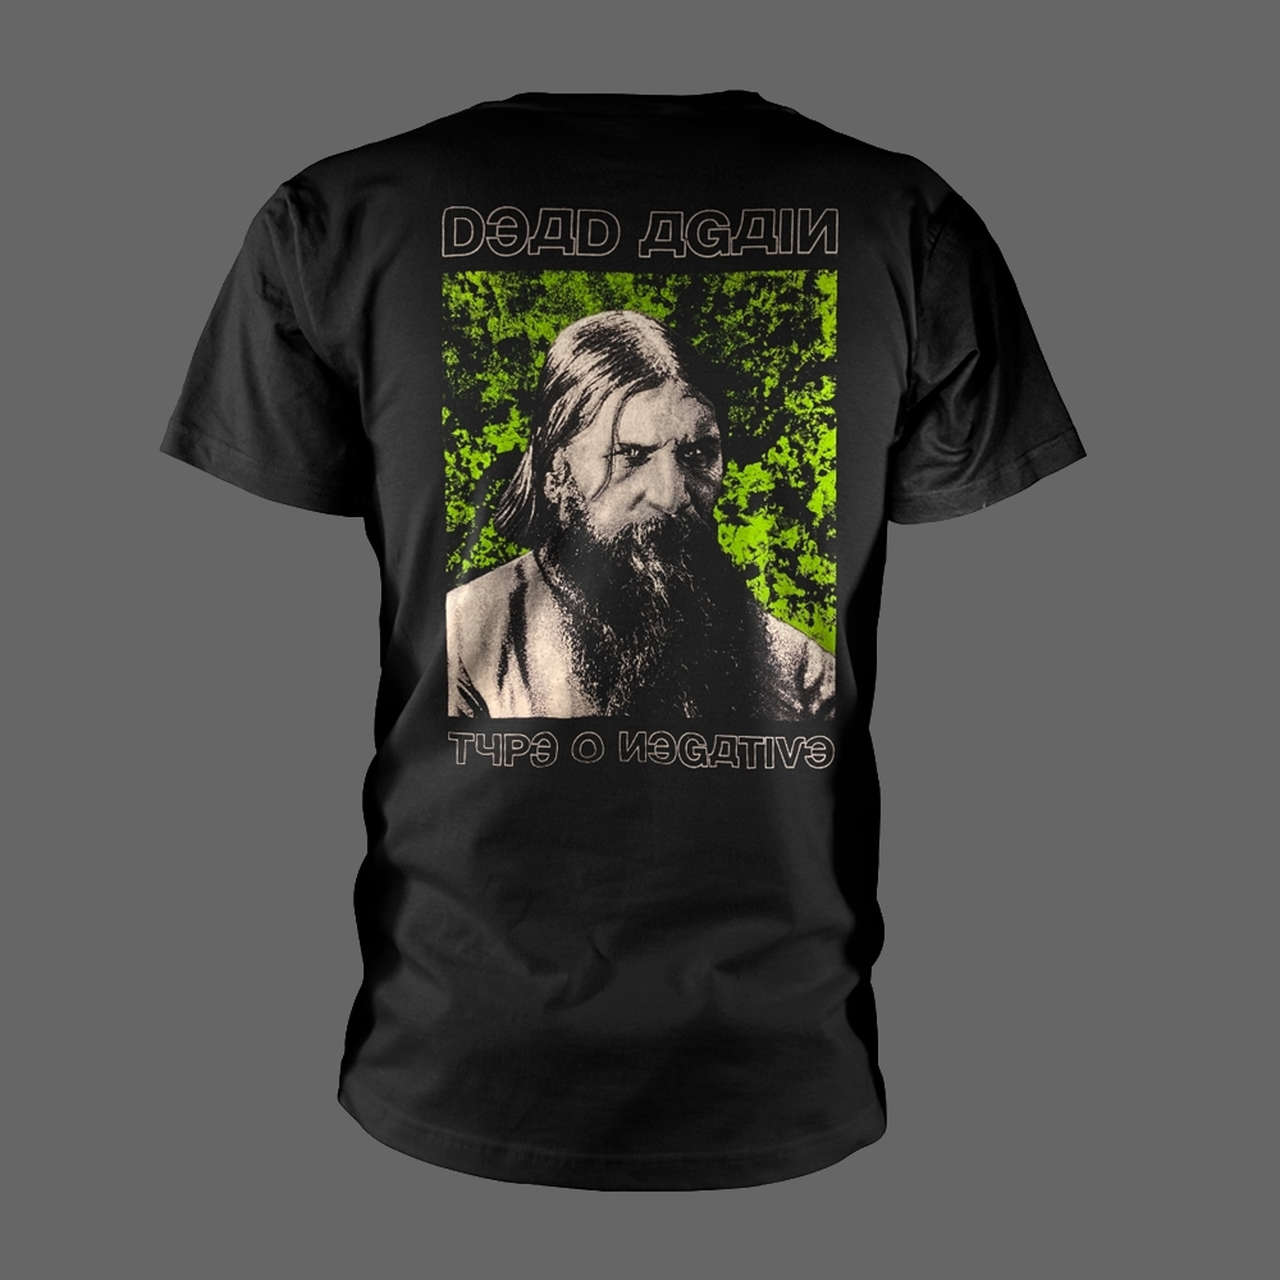 Type O Negative - Dead Again (Green Rasputin) (T-Shirt)